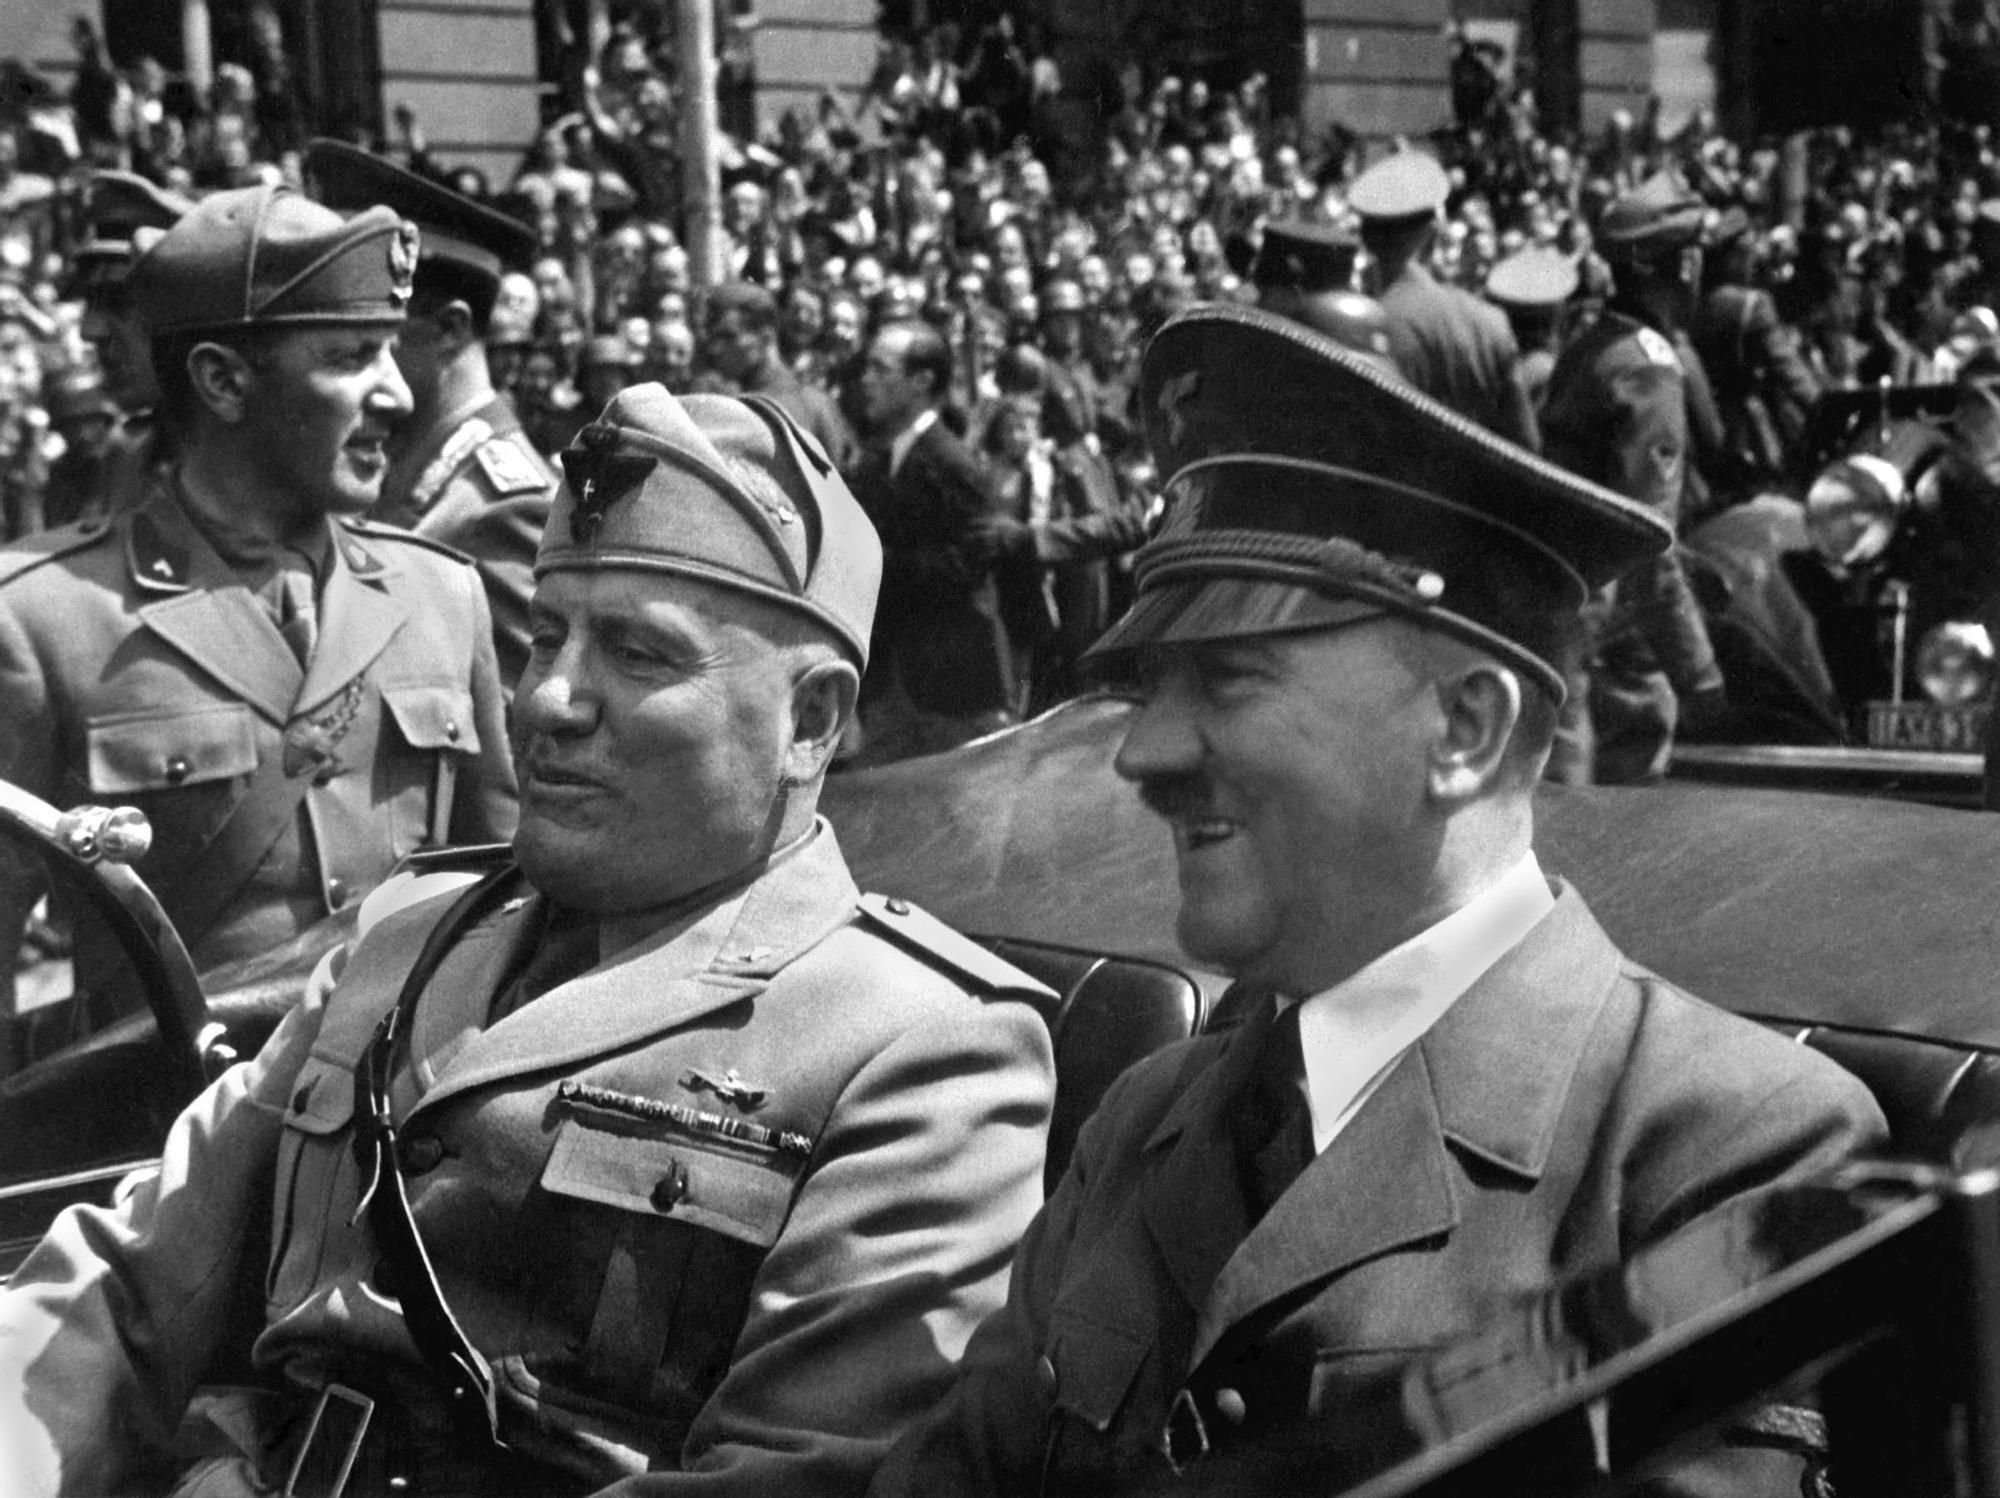 Benitto Mussolini junto a Adolf Hitler.